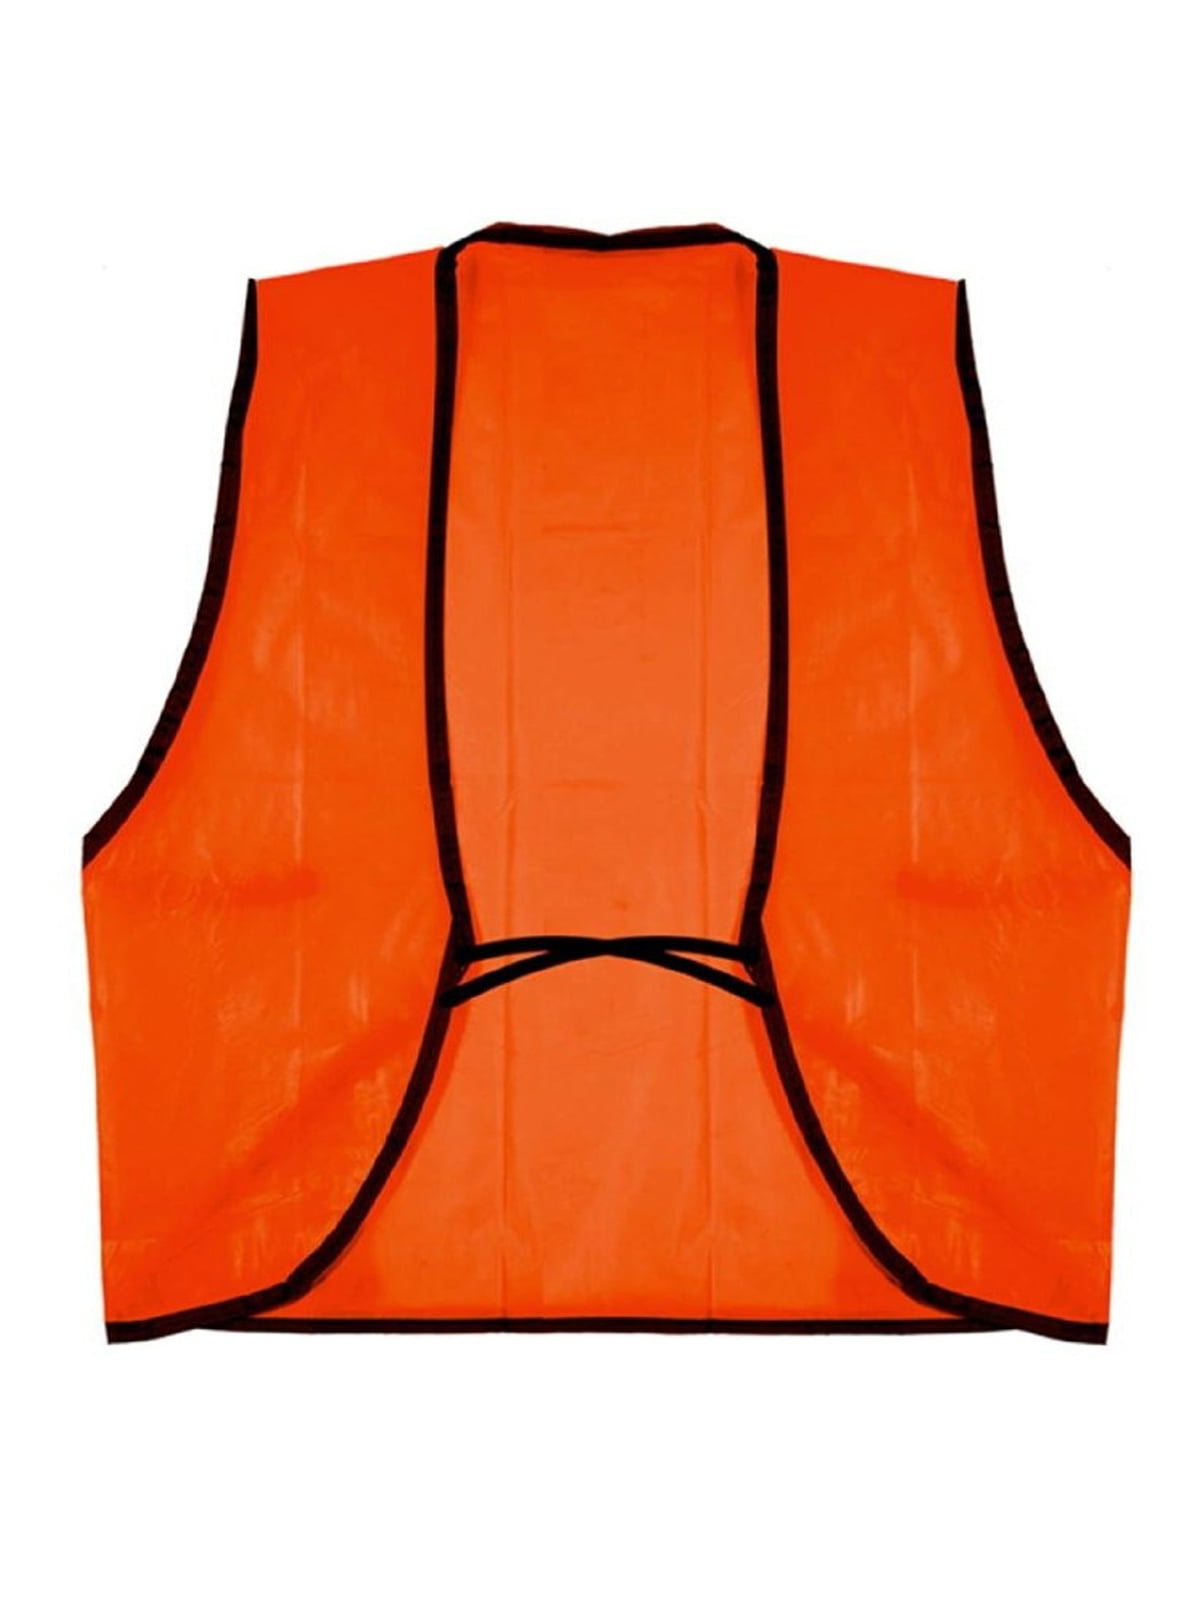 ALLEN COMPANY Adults' Blaze Orange Hunting Vest & Hat ADULT SIZE 